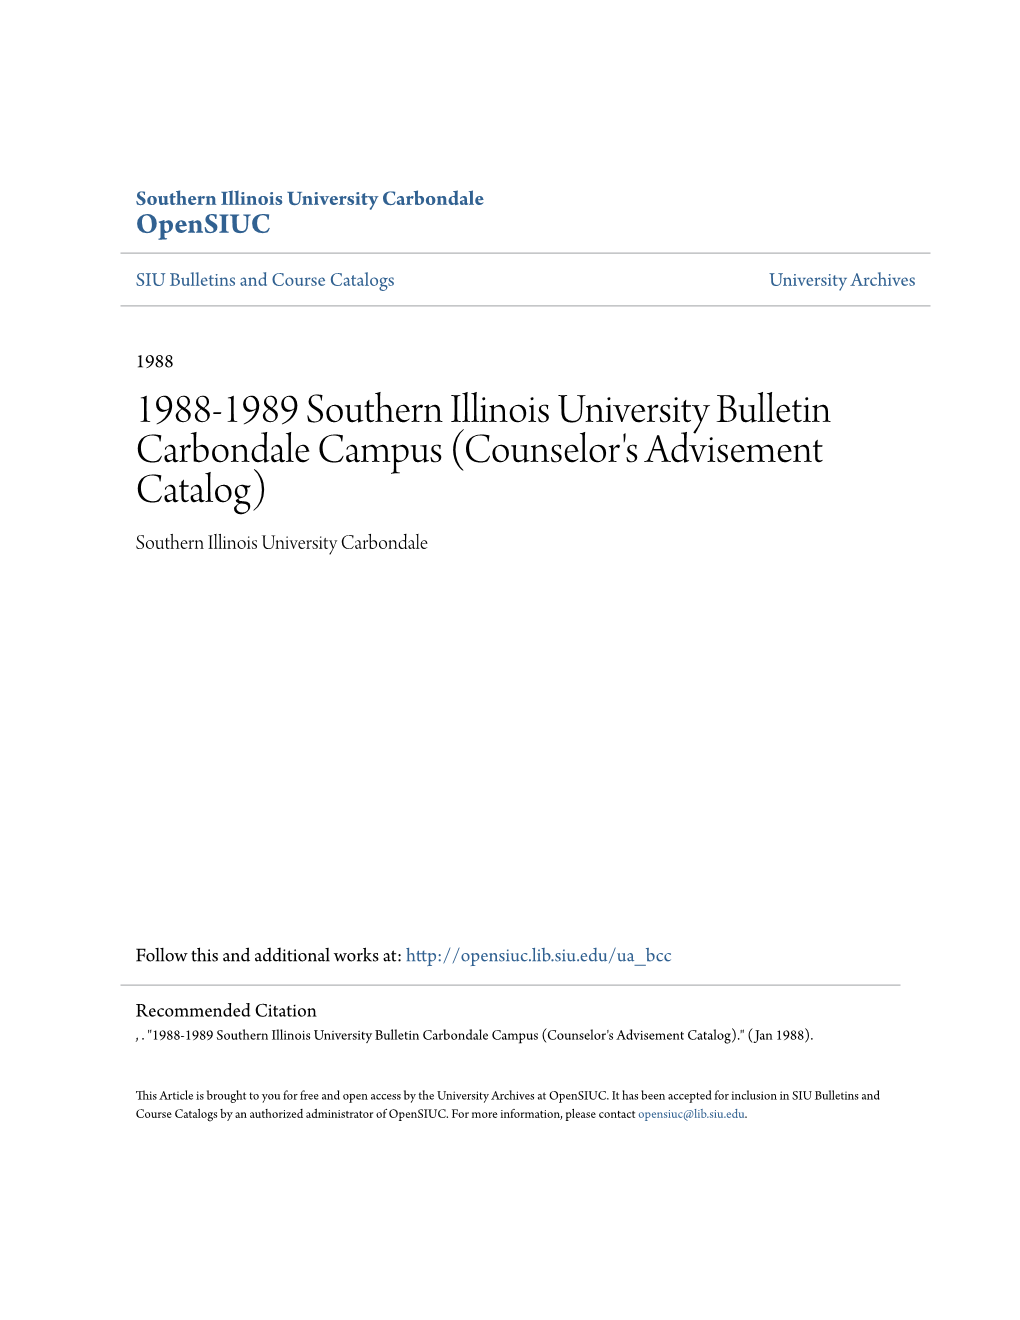 1988-1989 Southern Illinois University Bulletin Carbondale Campus (Counselor's Advisement Catalog) Southern Illinois University Carbondale